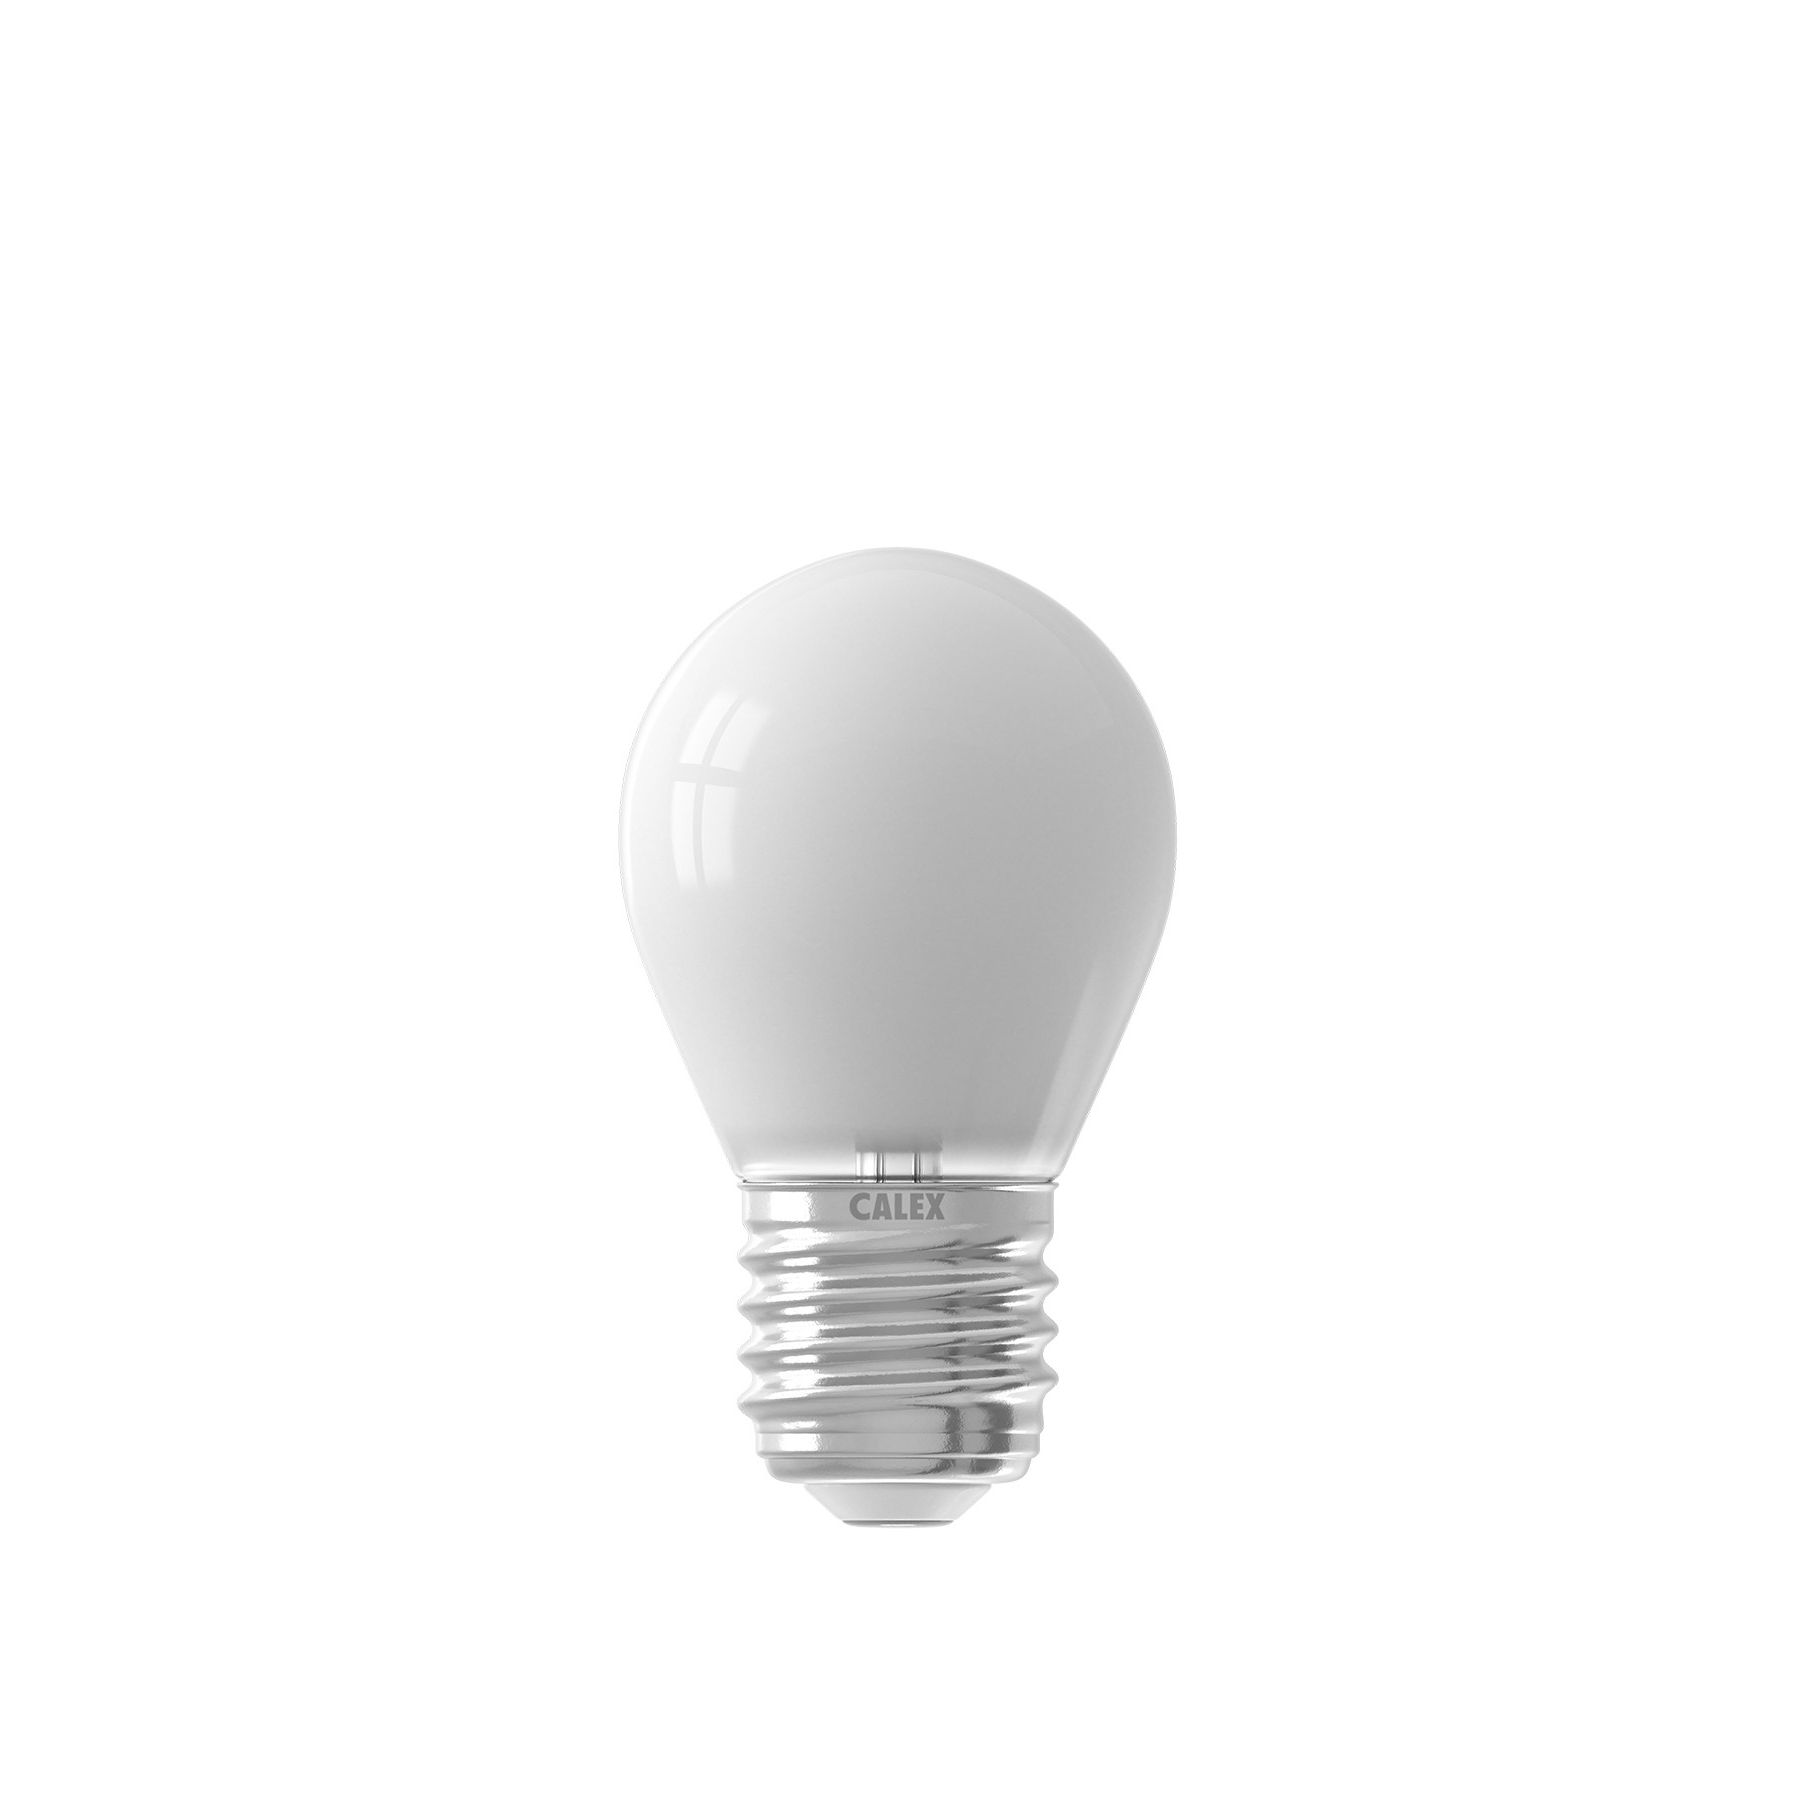 Calex Smart LED lamp - Ø 4,5 x 7,8 cm - E27 - 4,5W - dimfunctie via app - 2200 - white ambiance | Lichtkoning